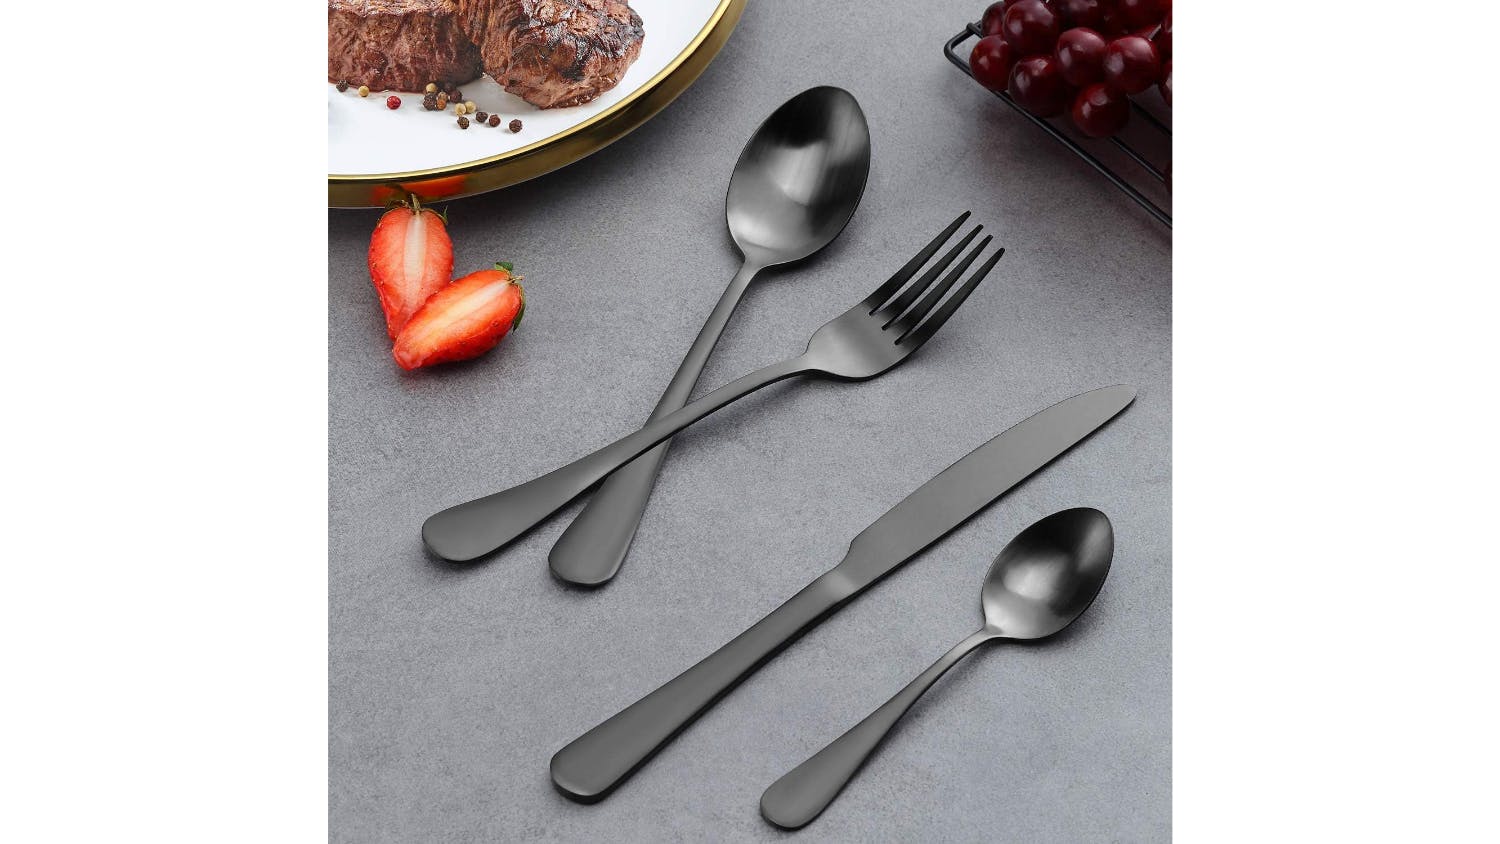 Kmall Stainless Steel Cutlery Set 20 pcs. - Matte Black